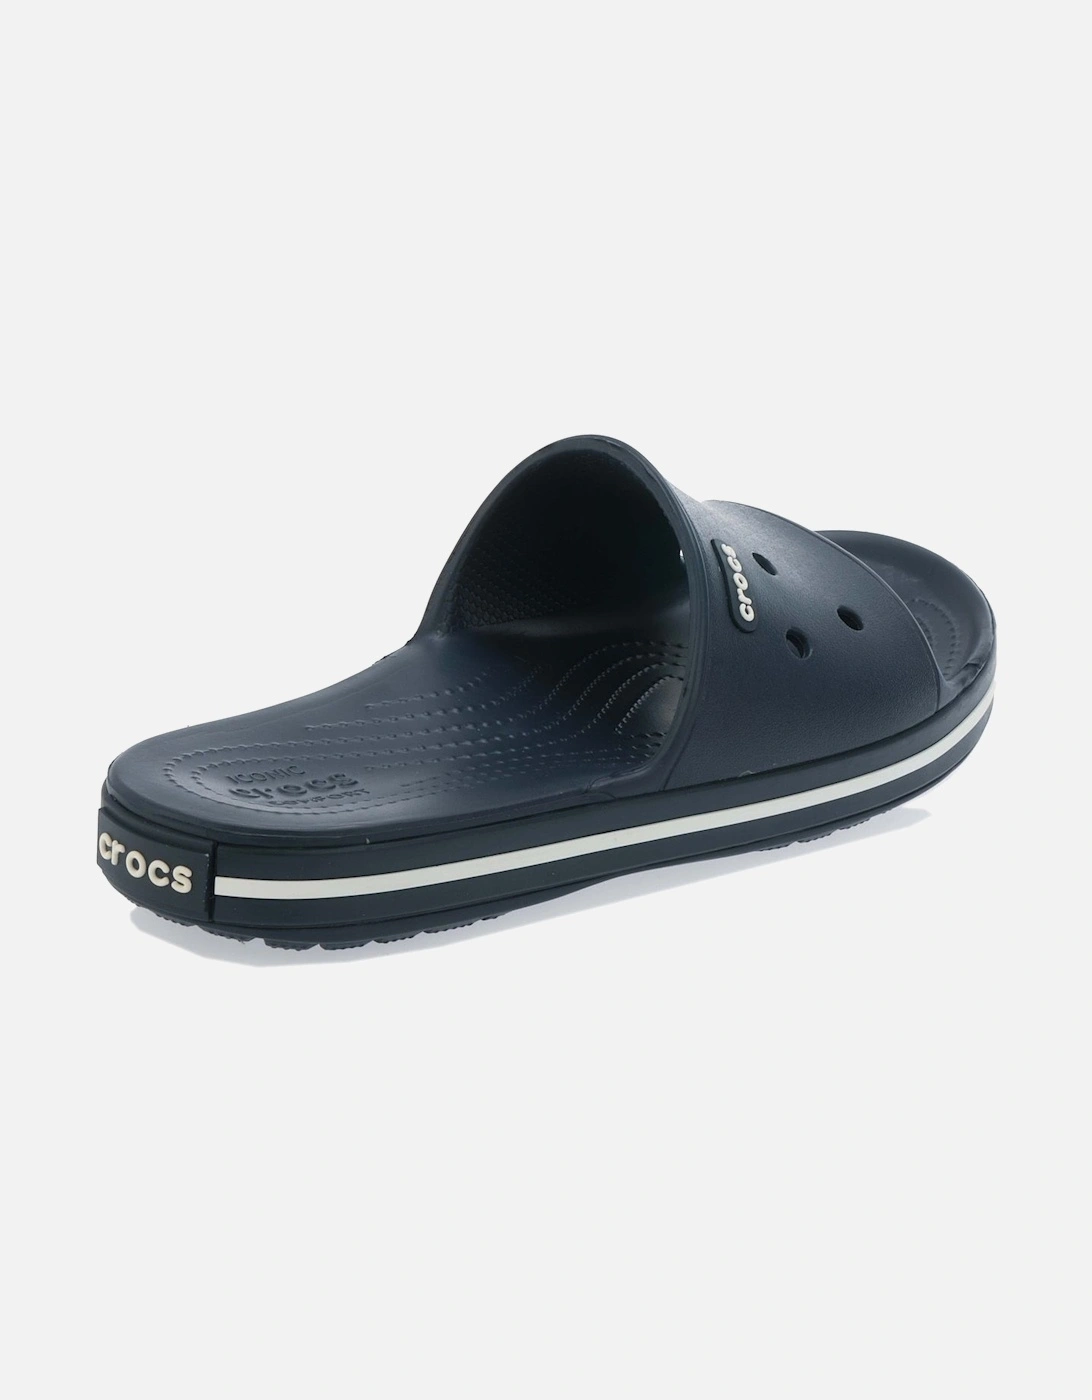 Adults Crocband 3 Slide Sandal